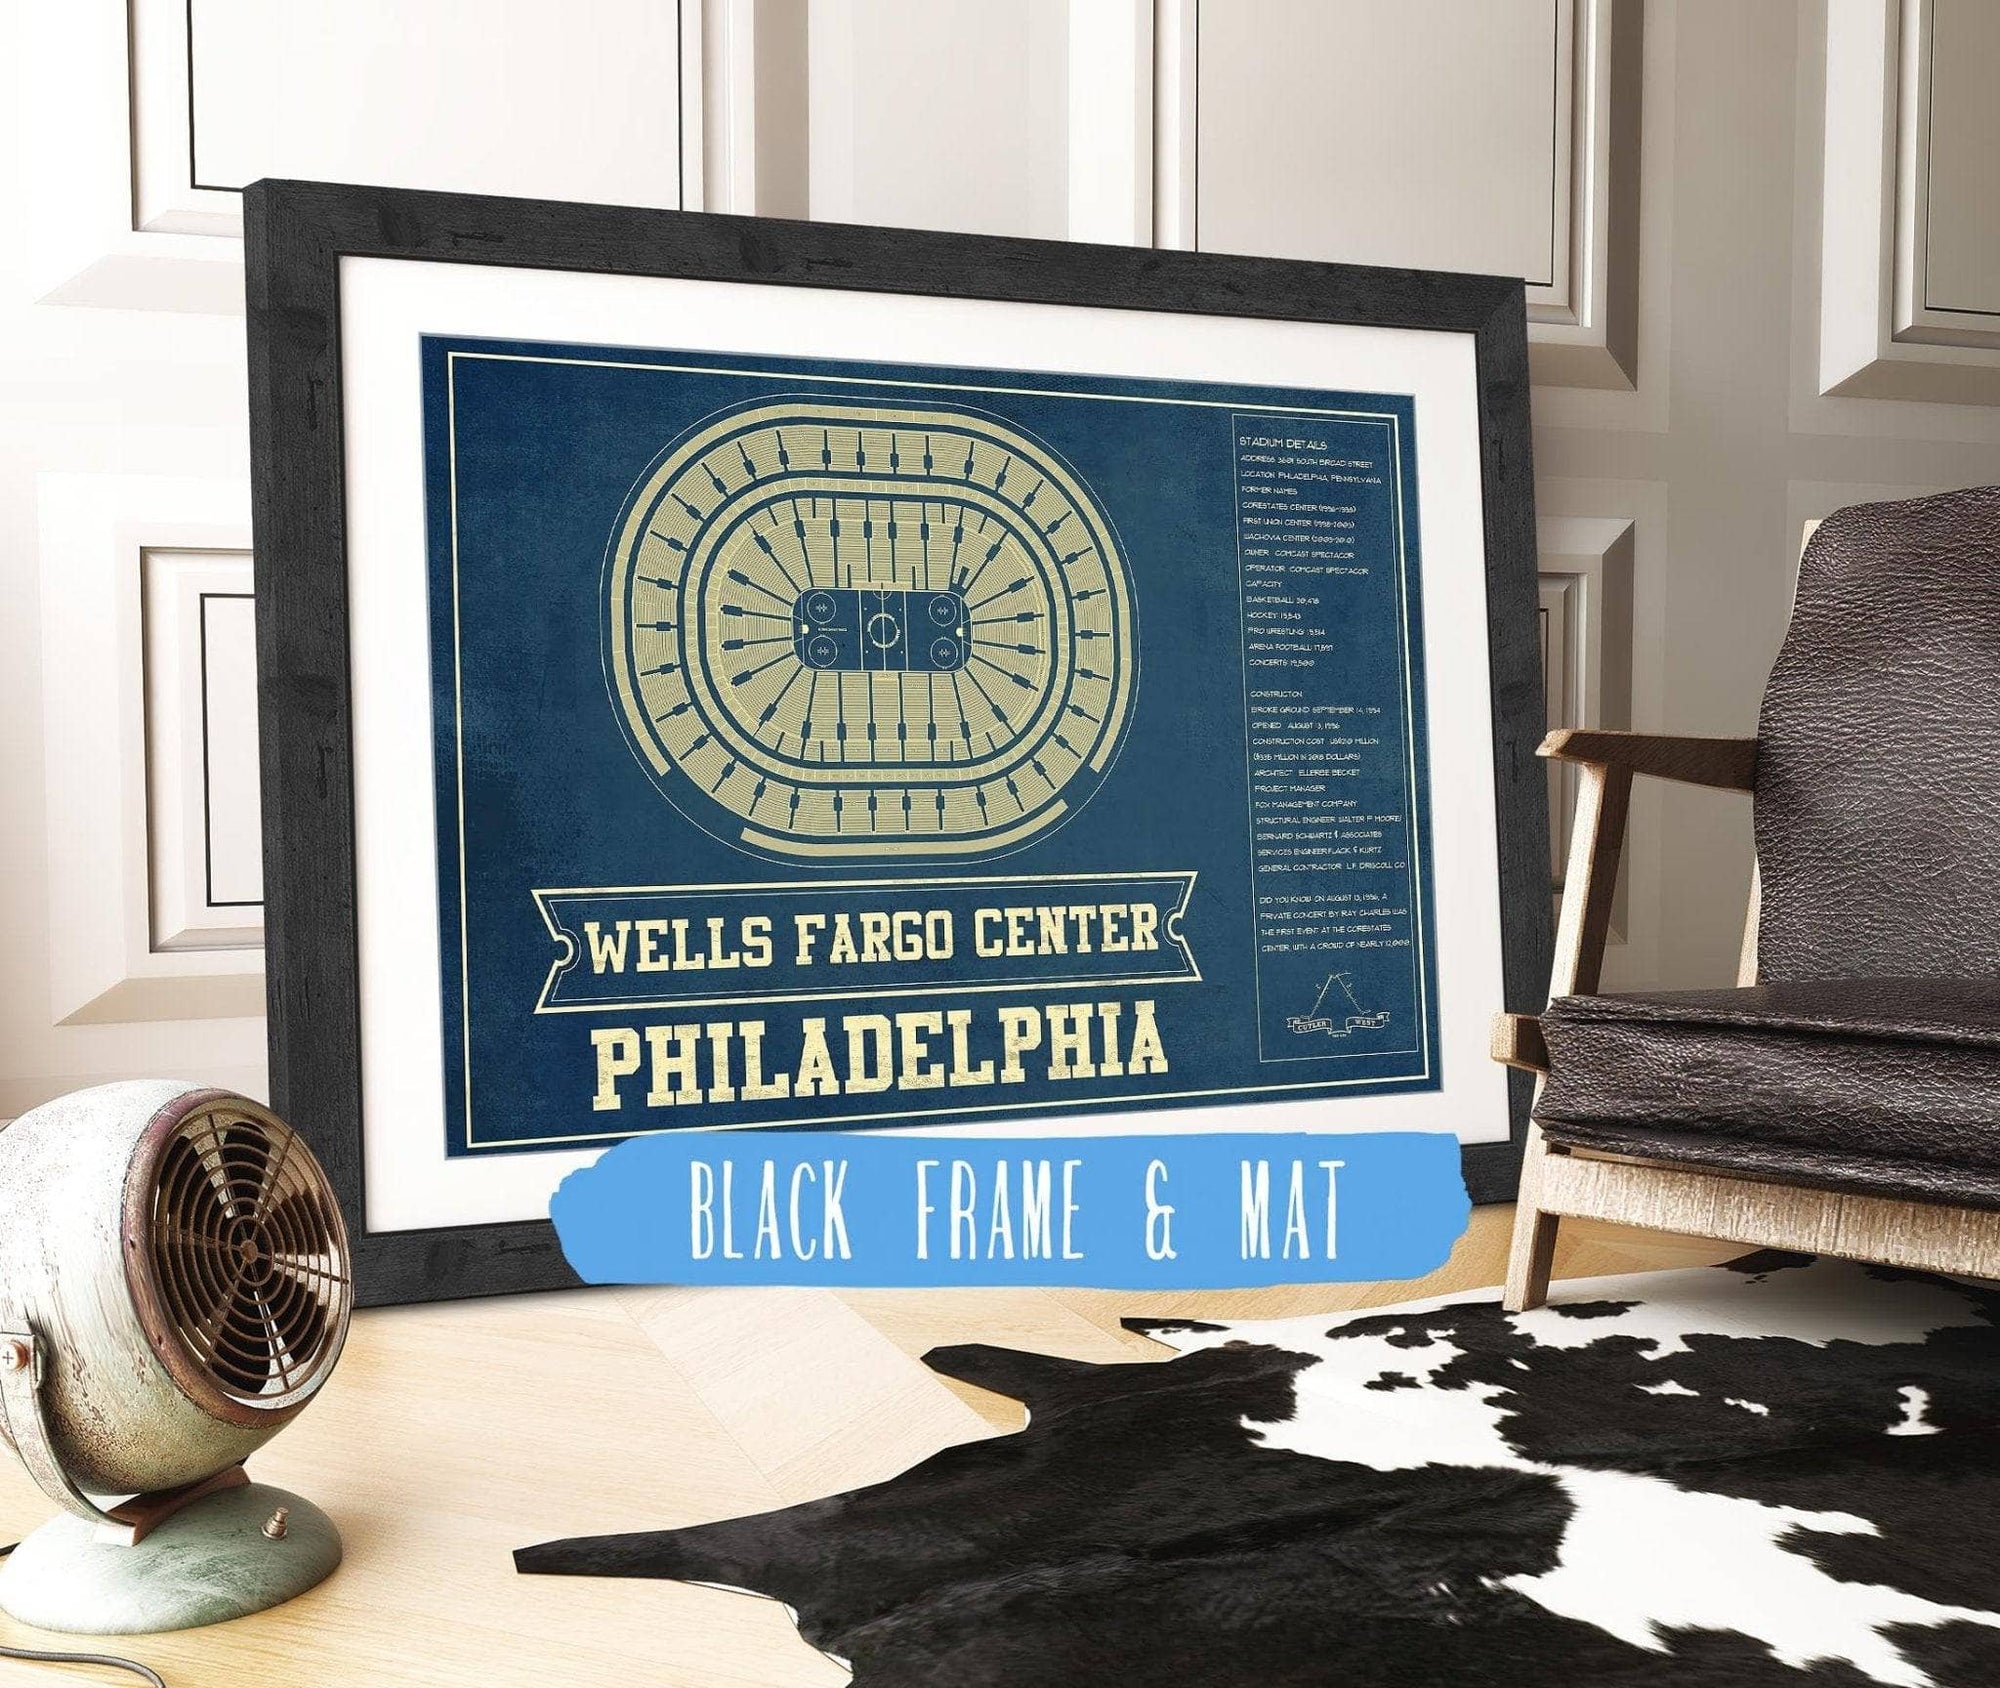 Cutler West 14" x 11" / Black Frame & Mat Philadelphia Flyers Wells Fargo Center Philadelphia Seating Chart - Vintage Hockey Team Color Print 673824383_80722